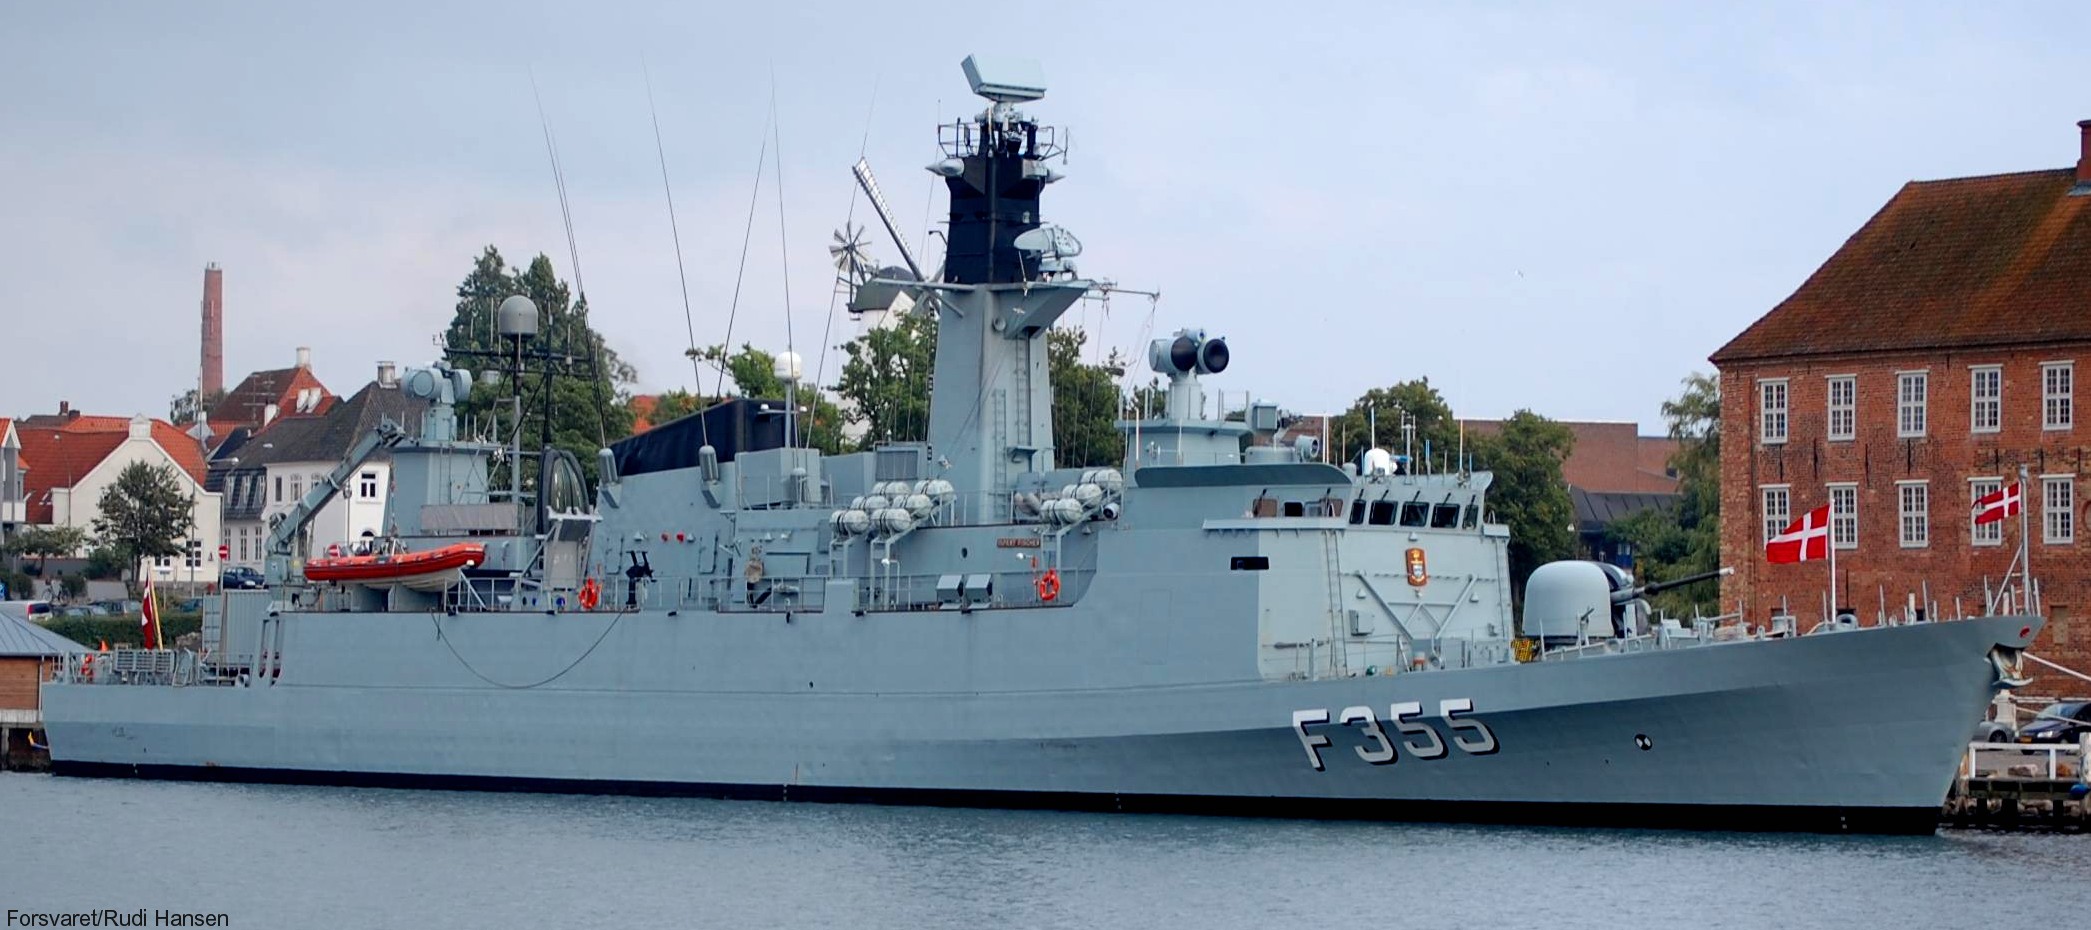 f-355 hdms olfert fischer niels juel class corvette royal danish navy rdn kongelige danske marine kdm 14